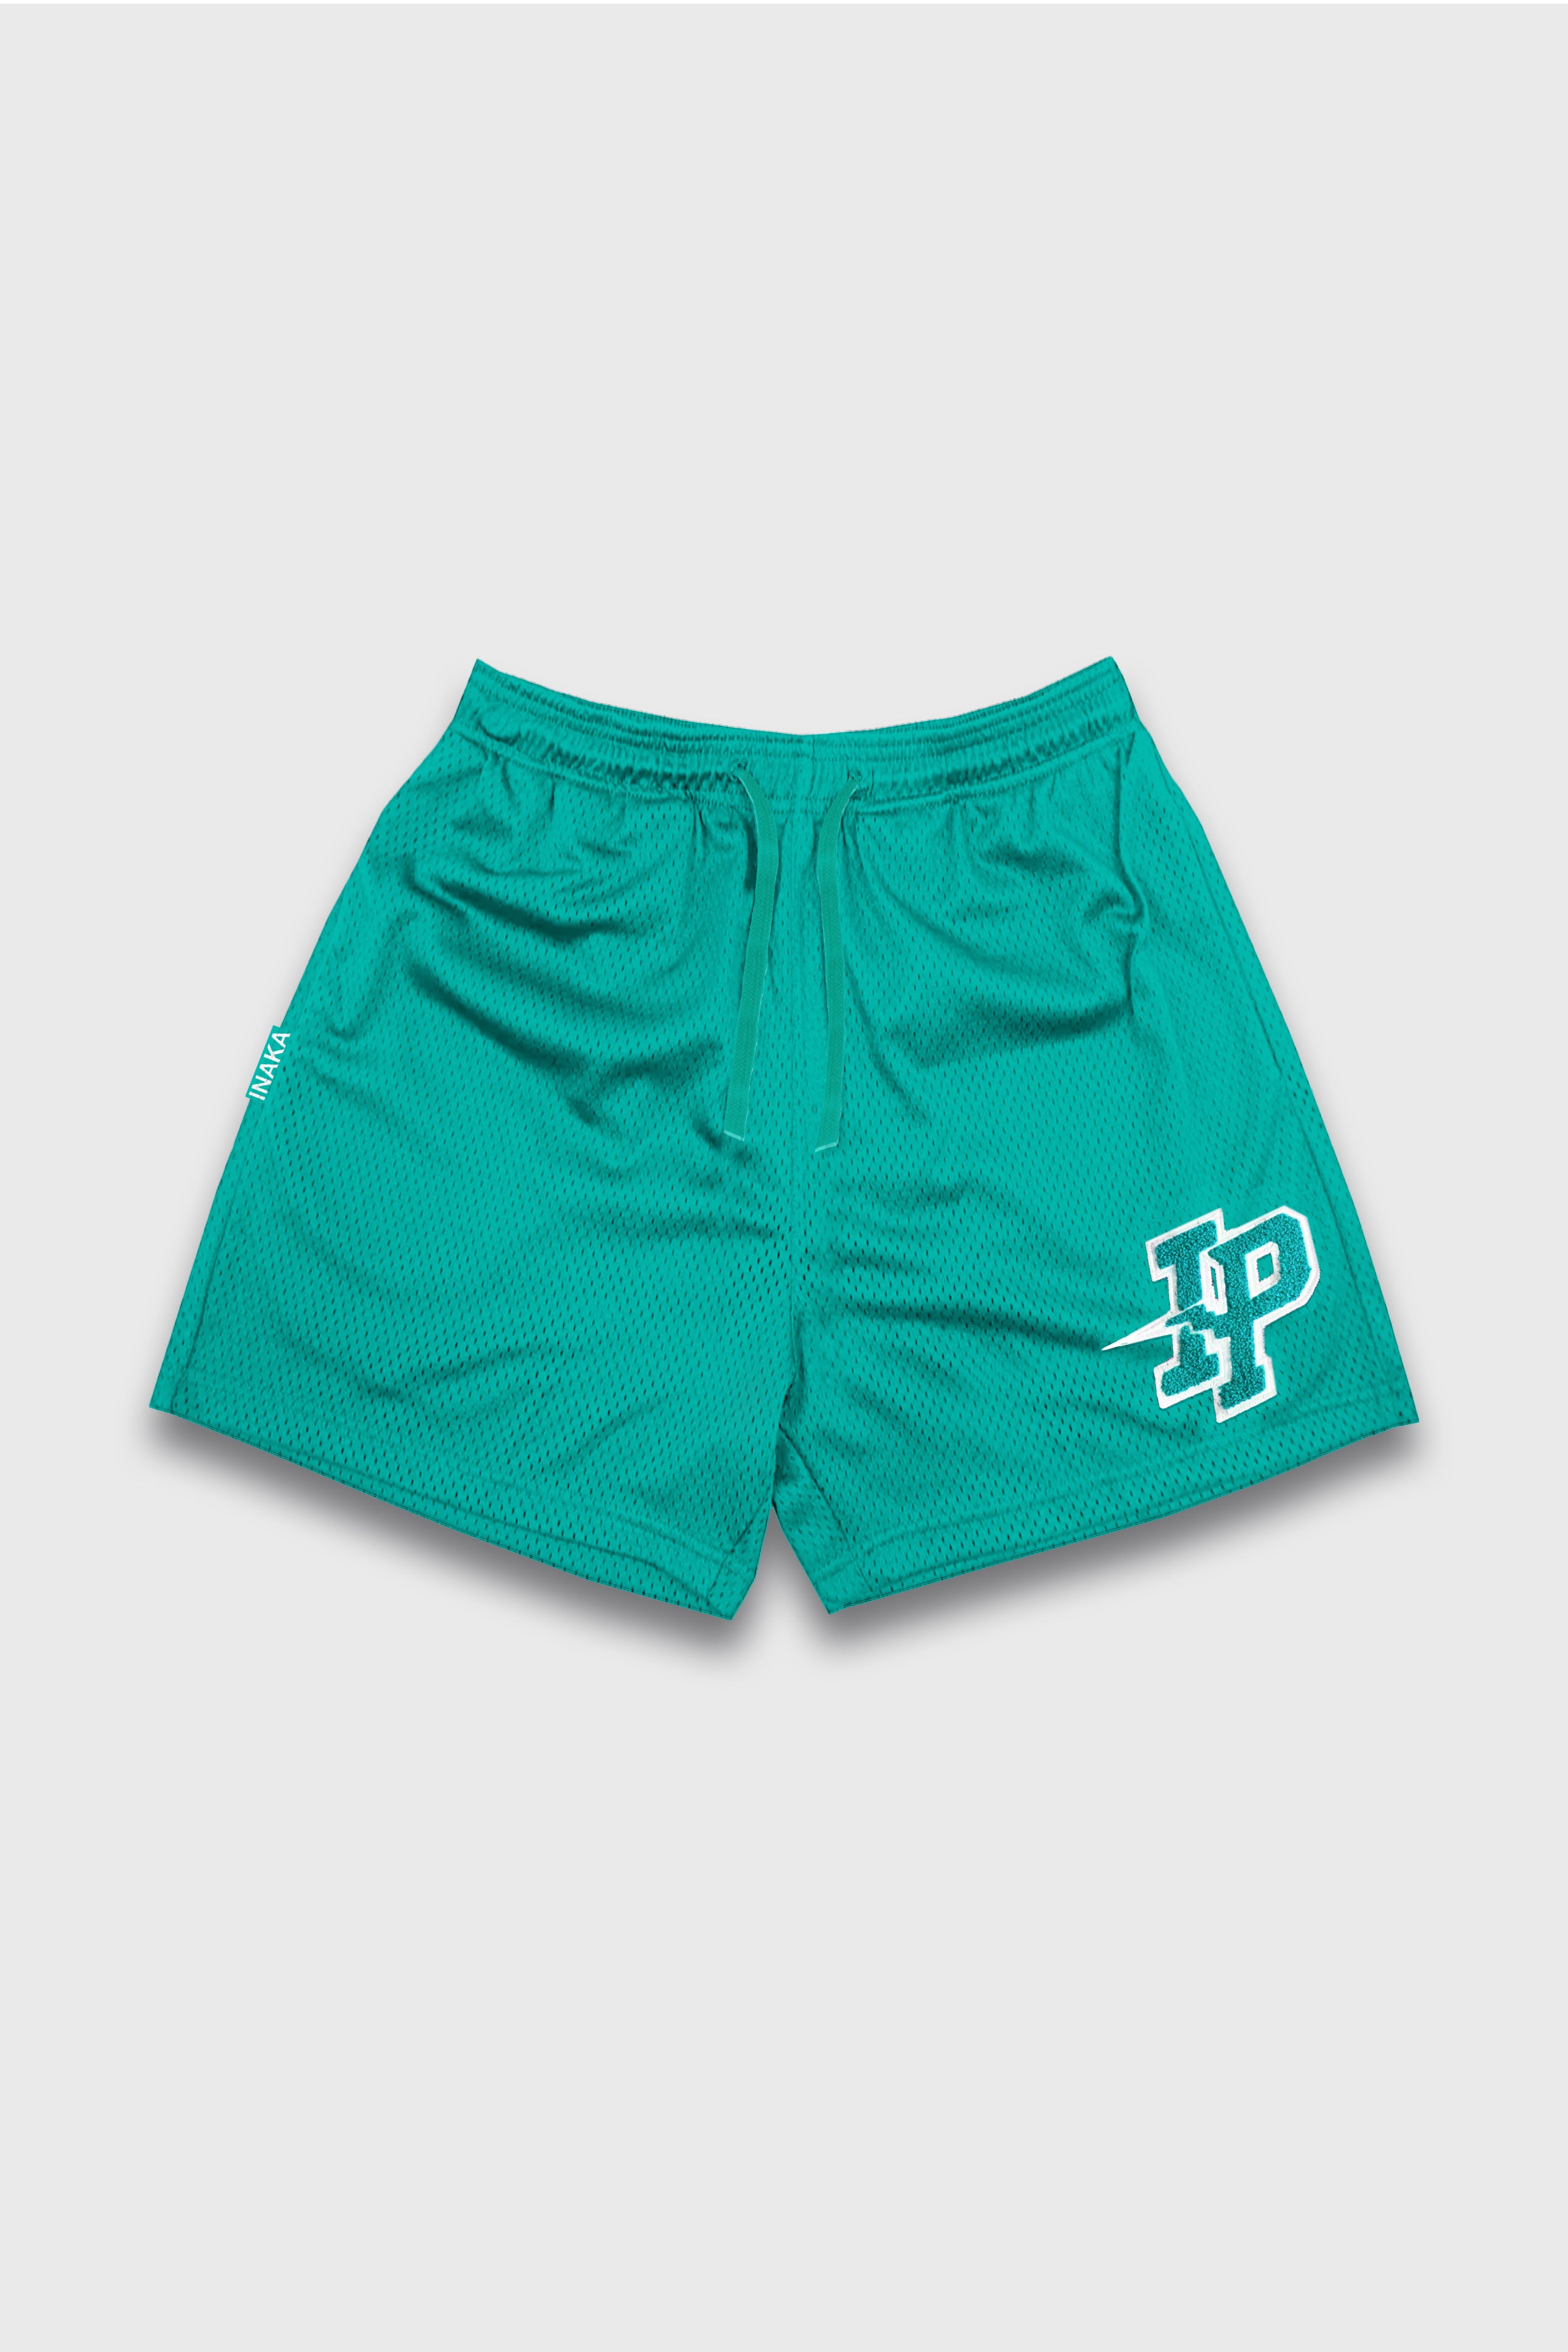 Patch Basic Shorts - Seafoam Green